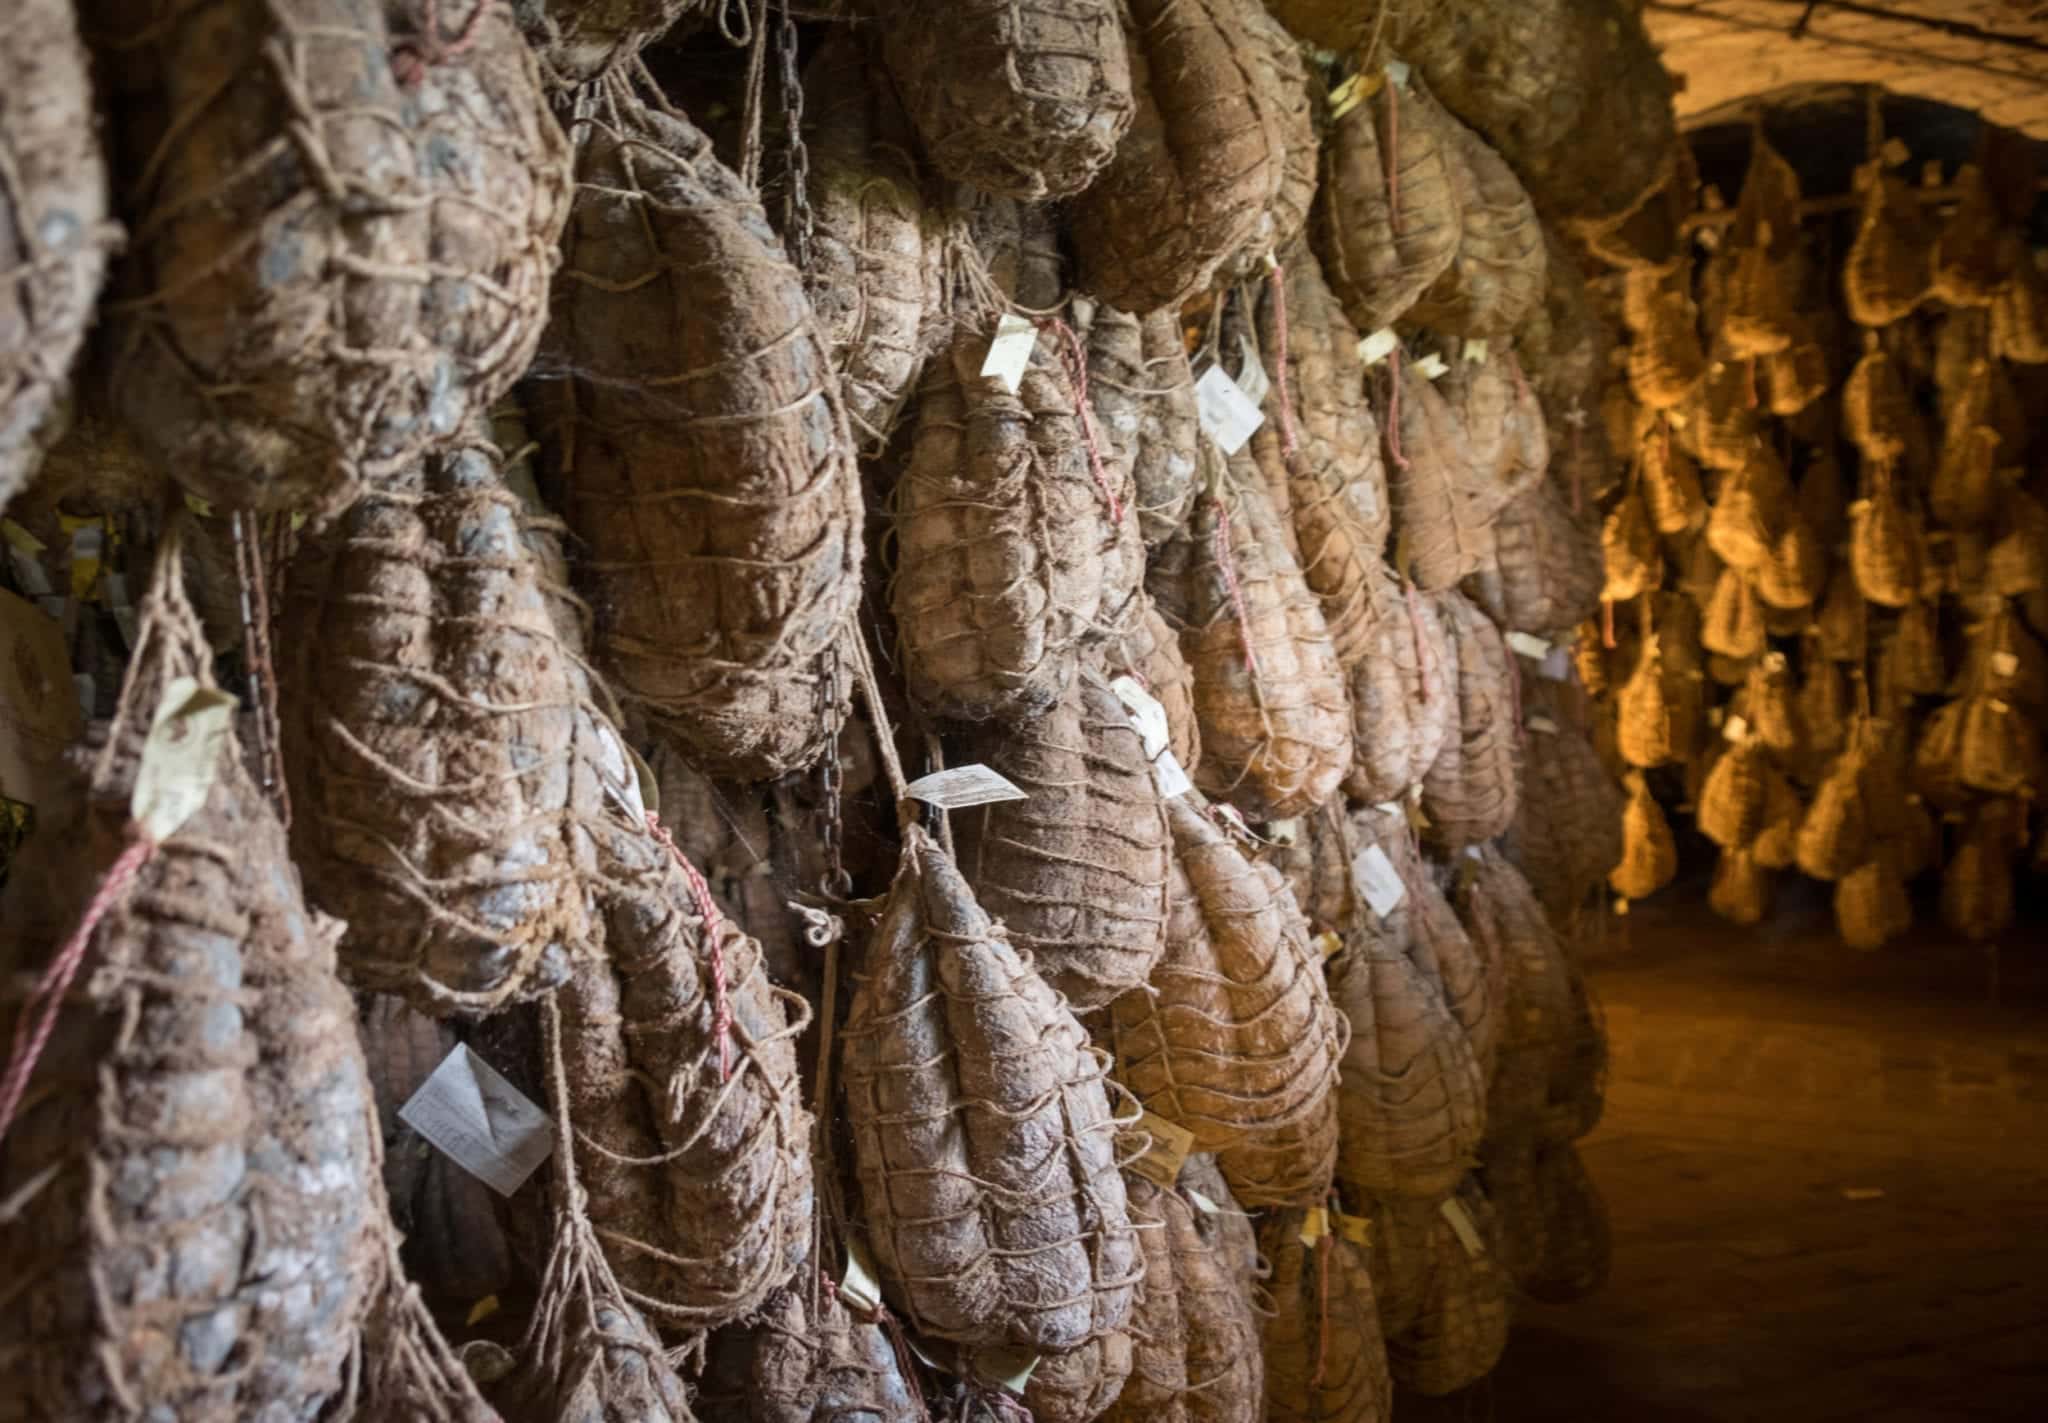 Racks of Culatello hams hanging in a cellar.